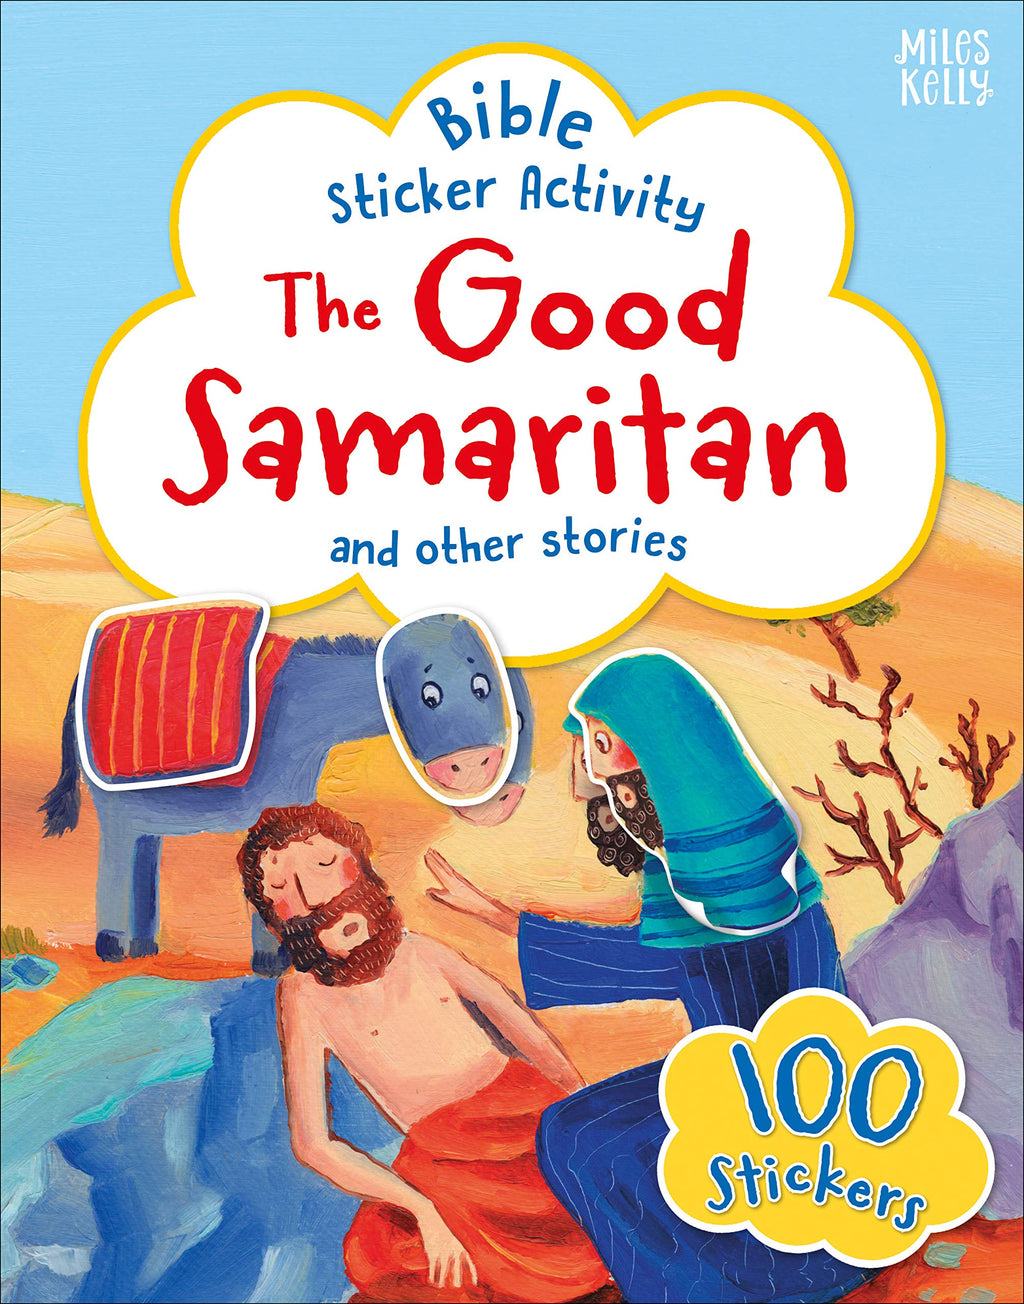 Bible Sticker Activity: The Good Samaritan